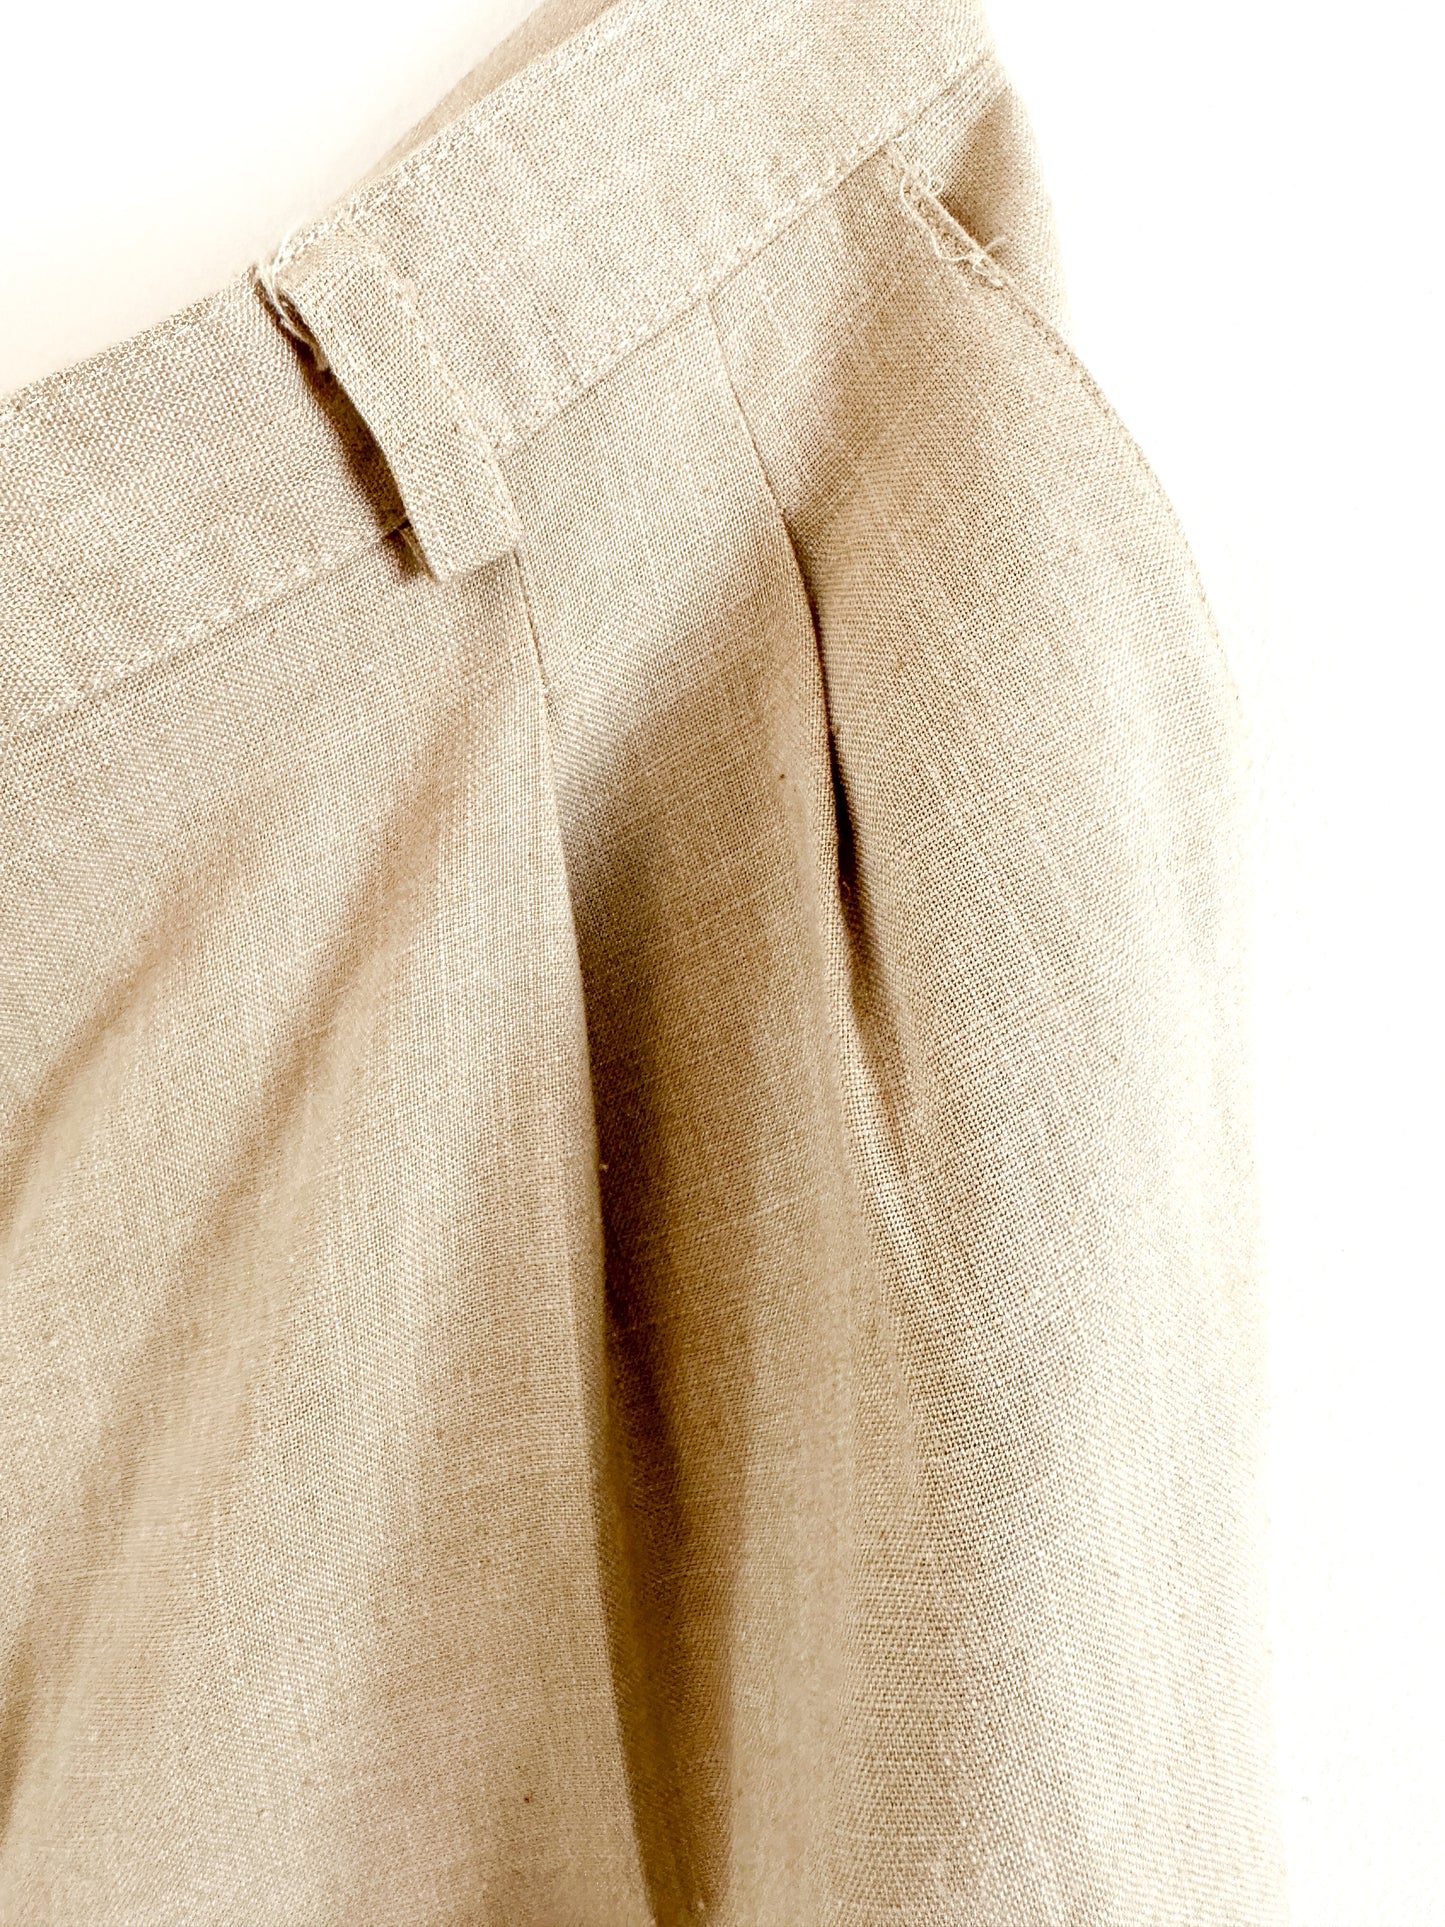 Vintage Women’s Tailored High Waisted Linen Blend Shorts